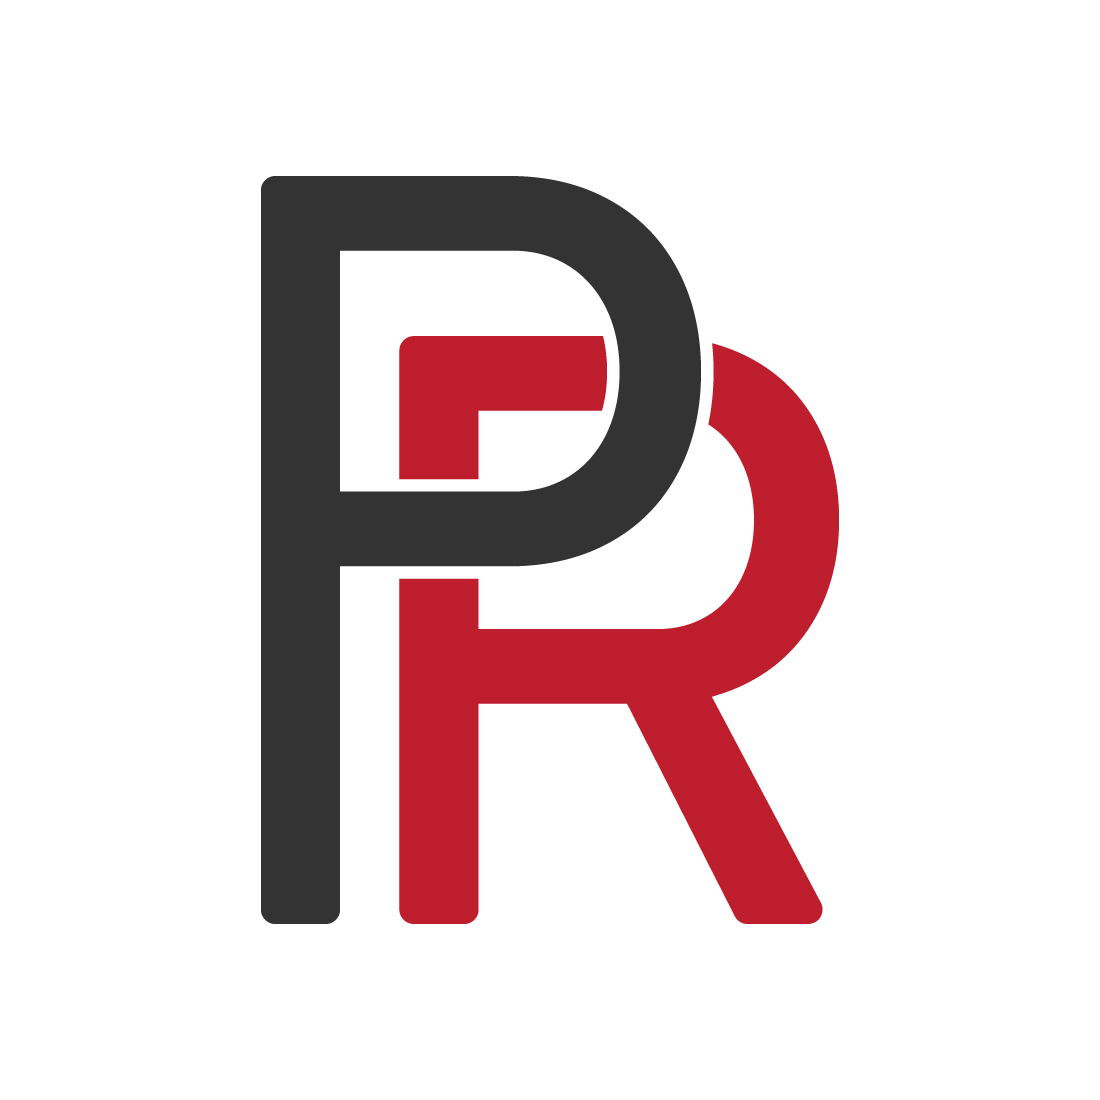 Initials PR letters logo design vector images PR logo design template royalty RP logo red and black color Premium vector illustration preview image.